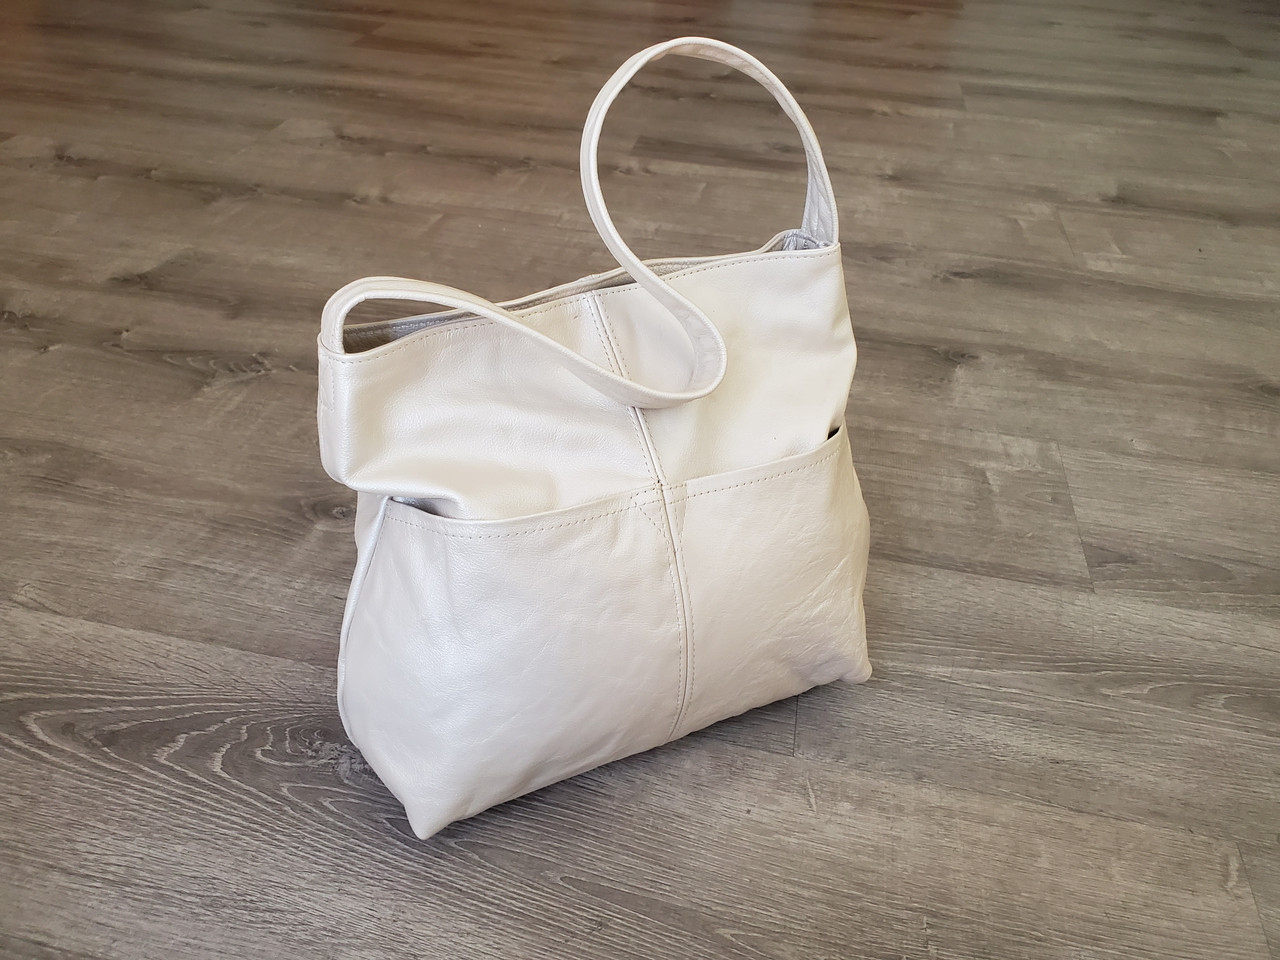 Pure Leather Plain Hobo Bag